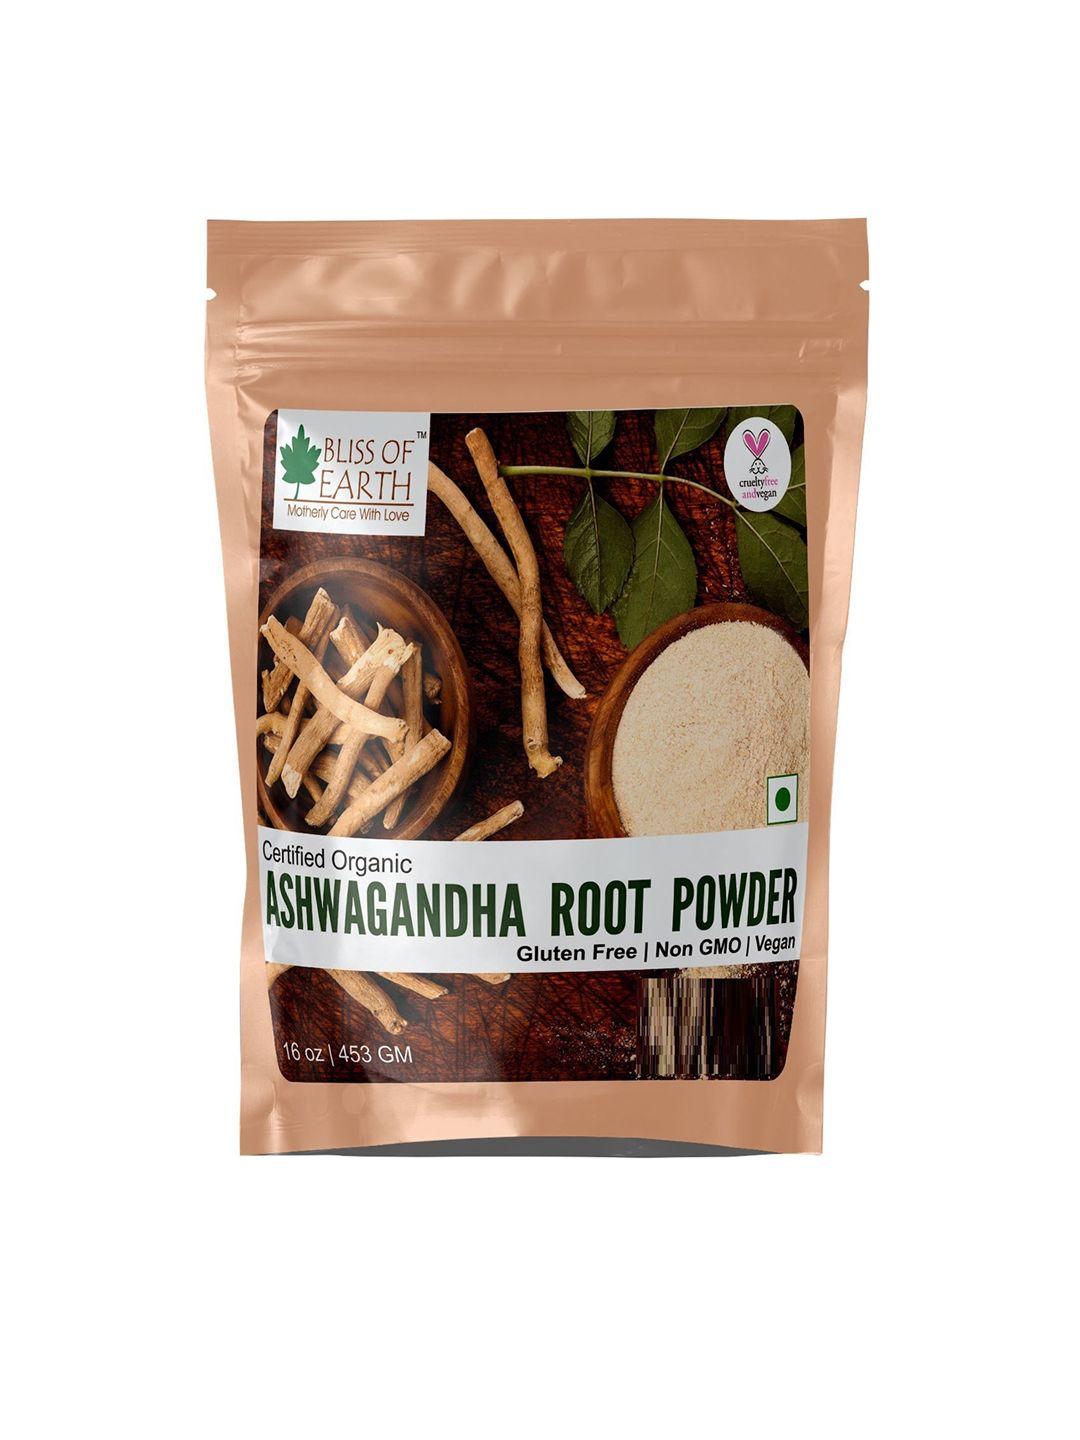 bliss of earth certified organic ashwagandha root powder 453 gm